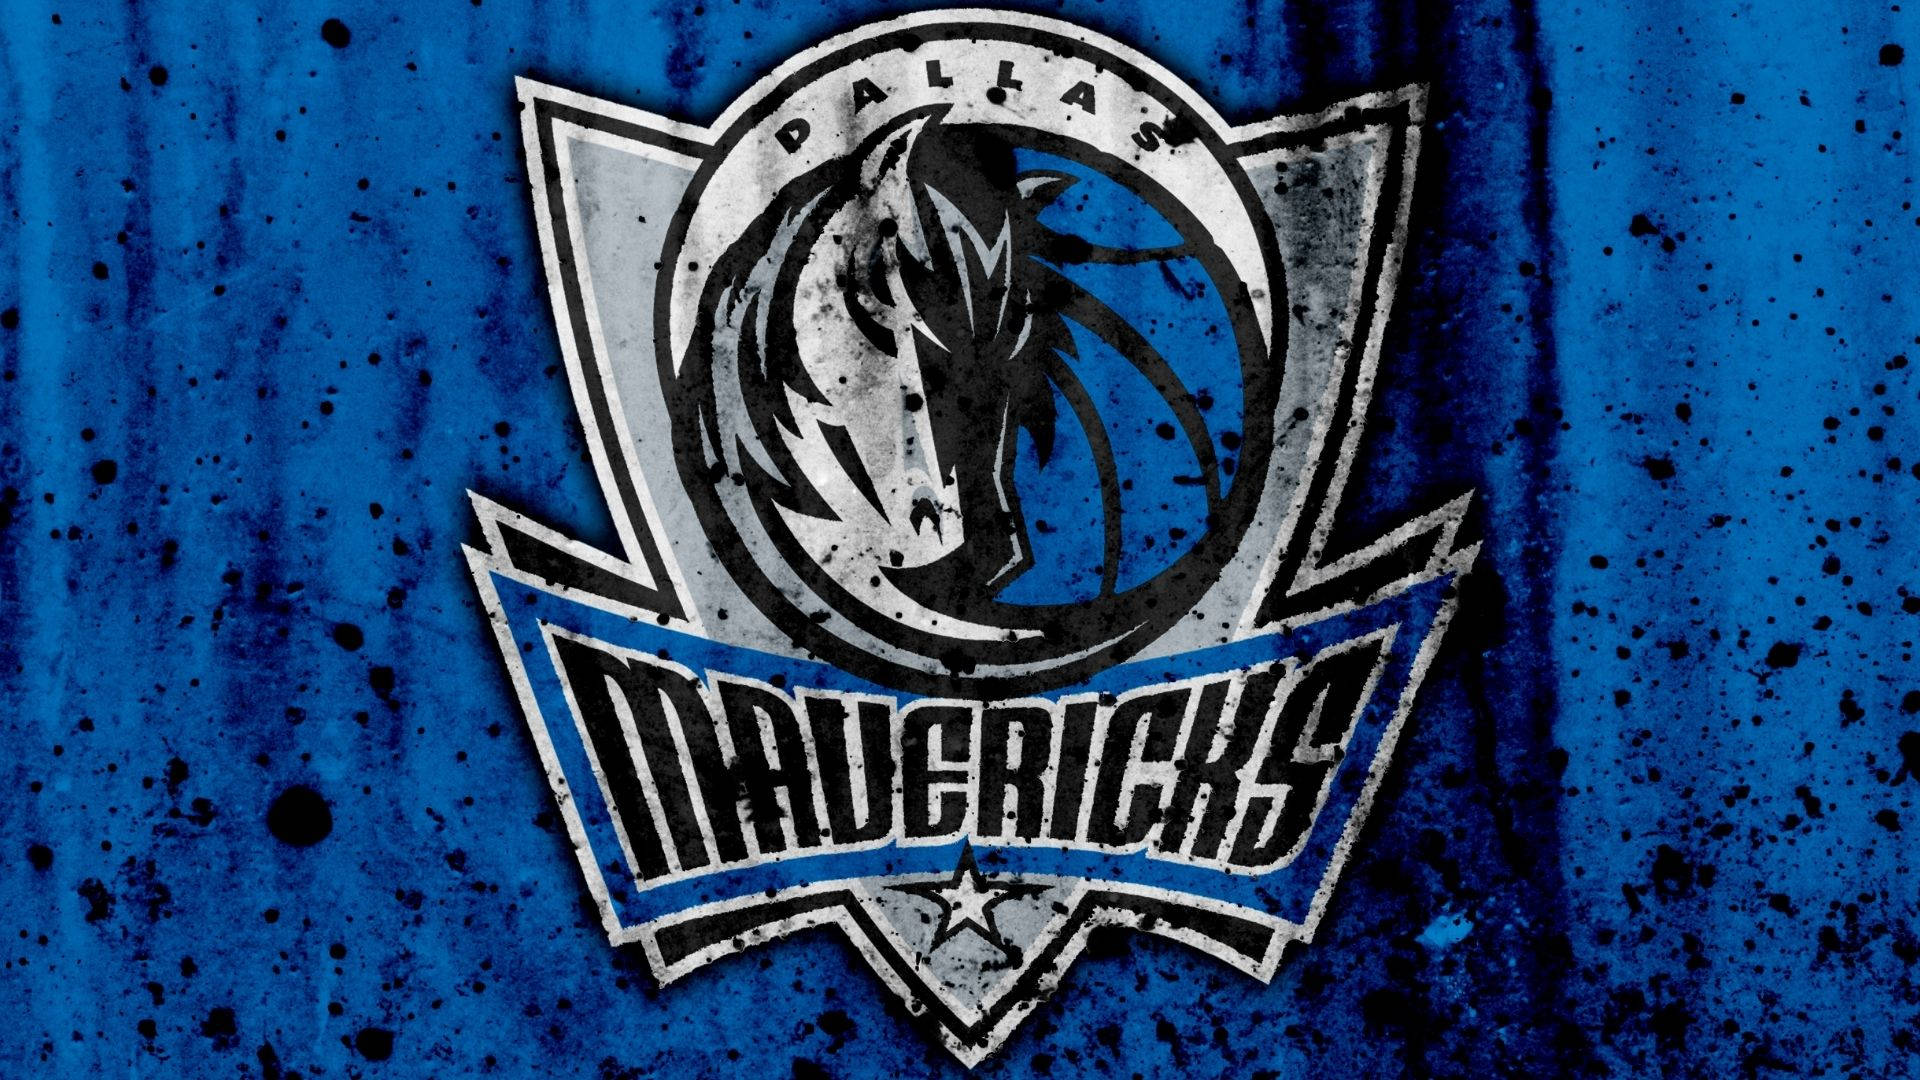 Dallas Mavericks Paint Splashes Background